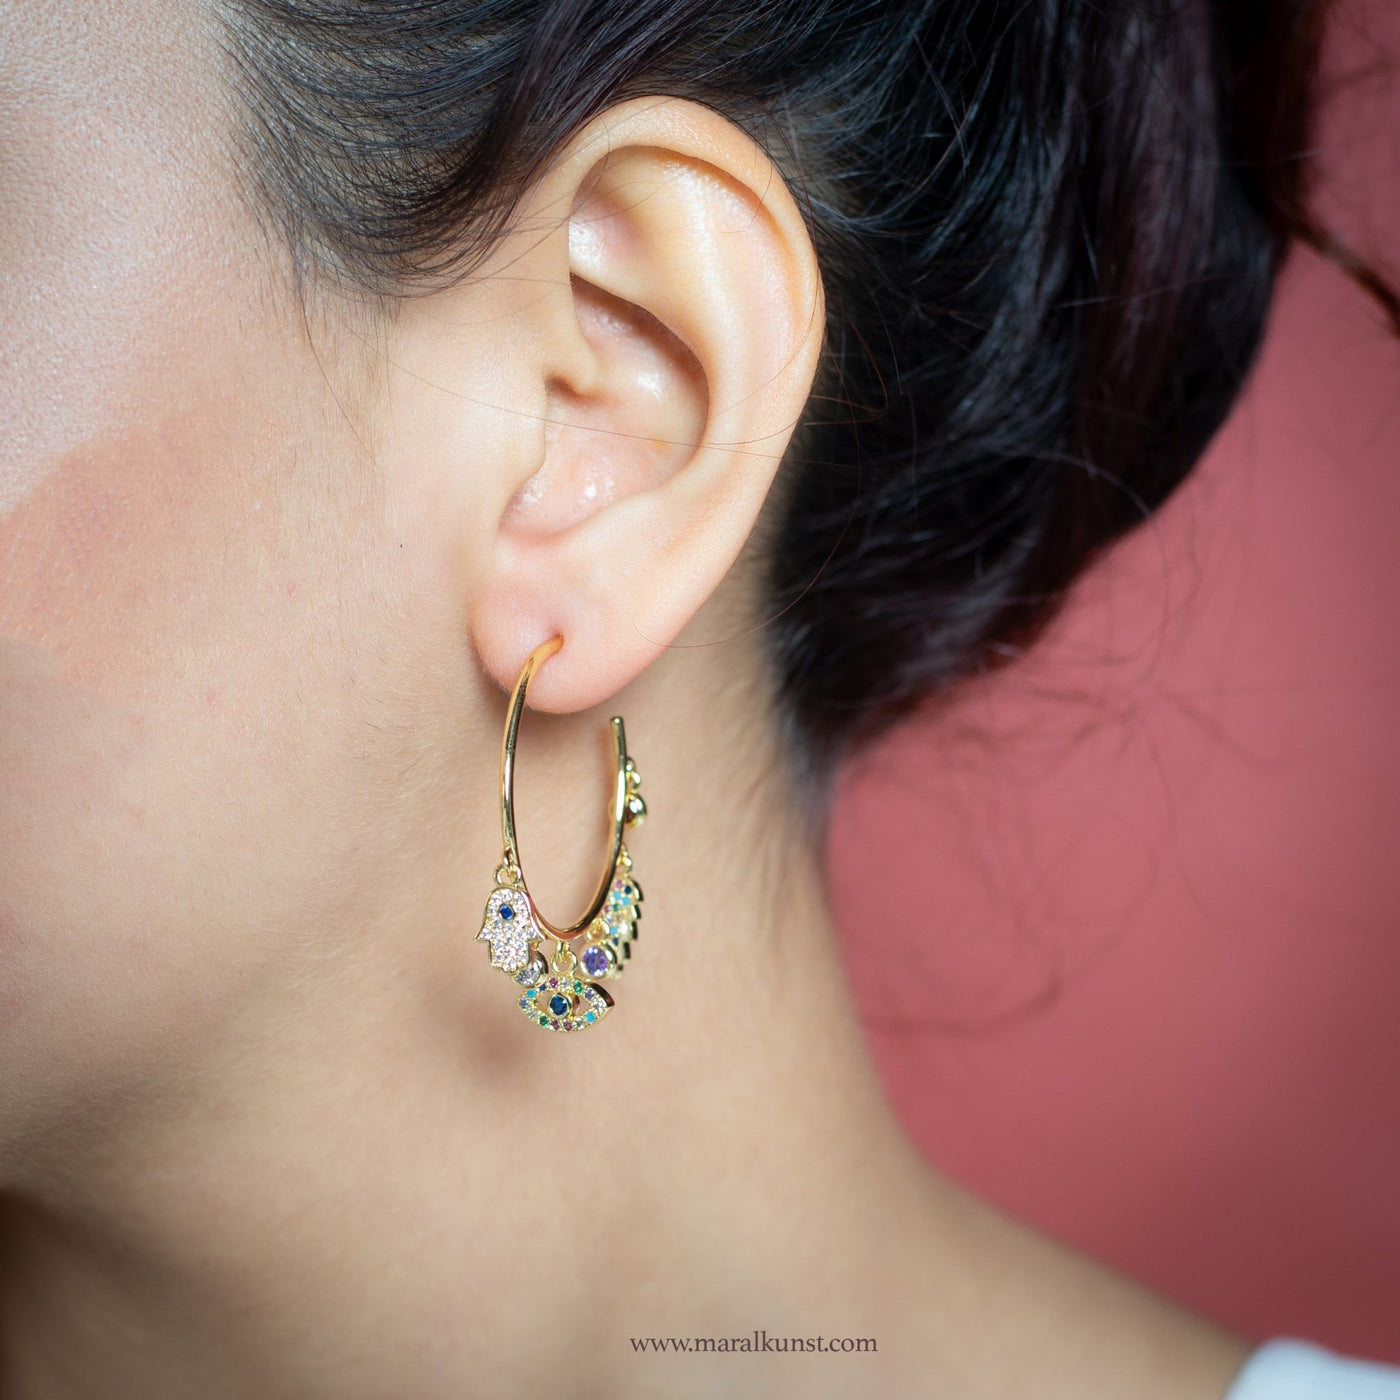 Fatima hand earrings - Maral Kunst Jewelry